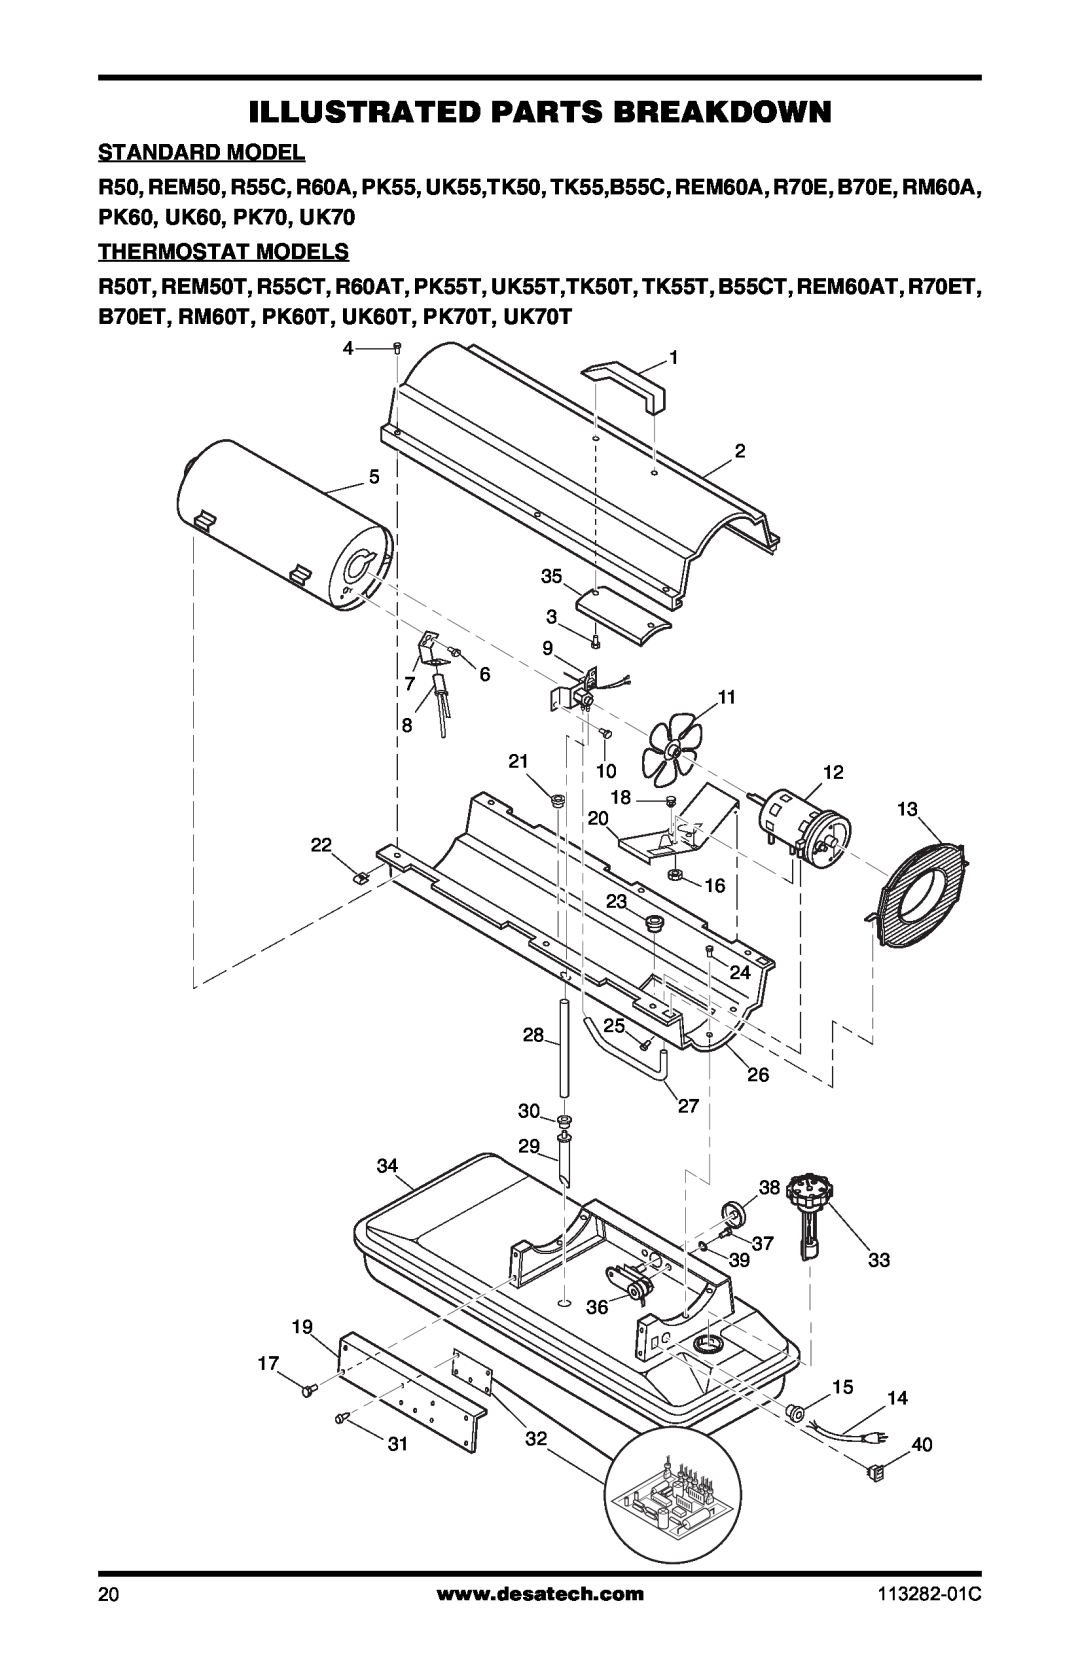 Desa BTU/HR owner manual Illustrated Parts Breakdown, Standard Model 